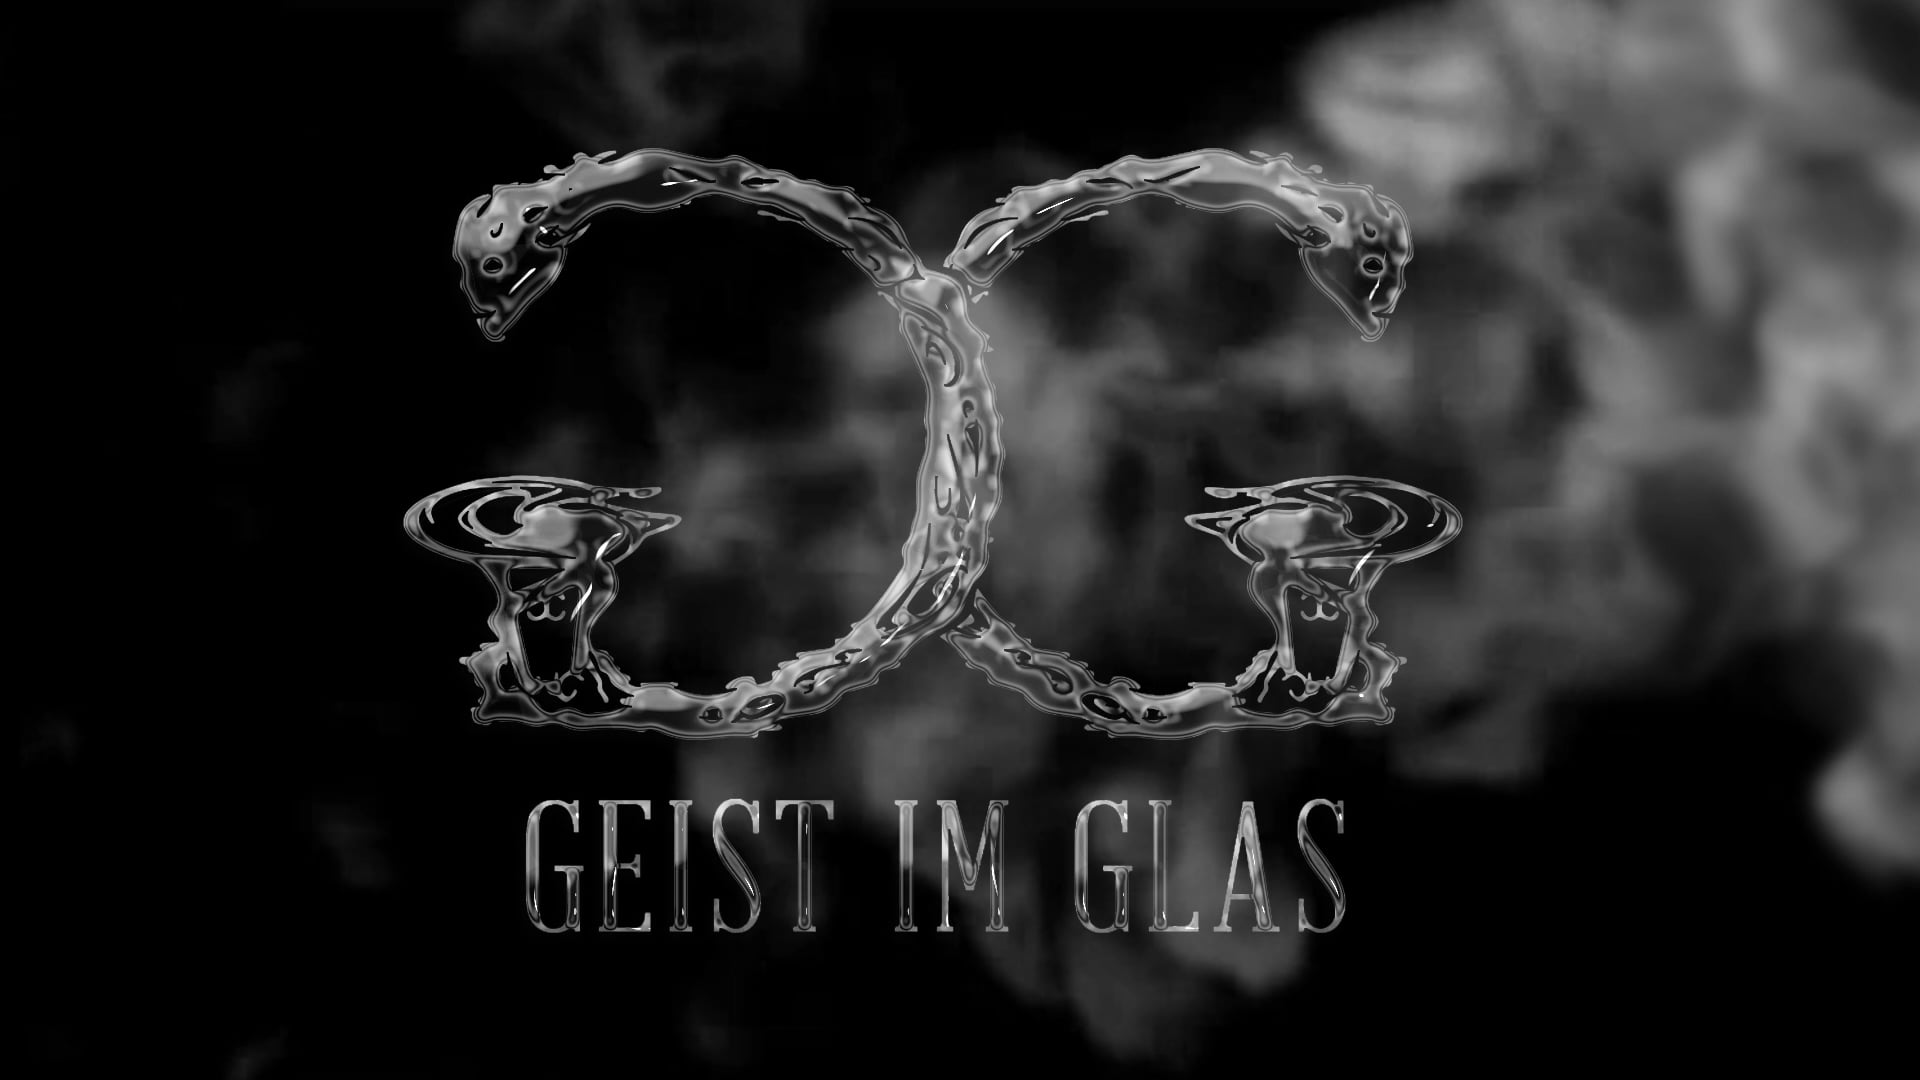 Geist glas logo reveal